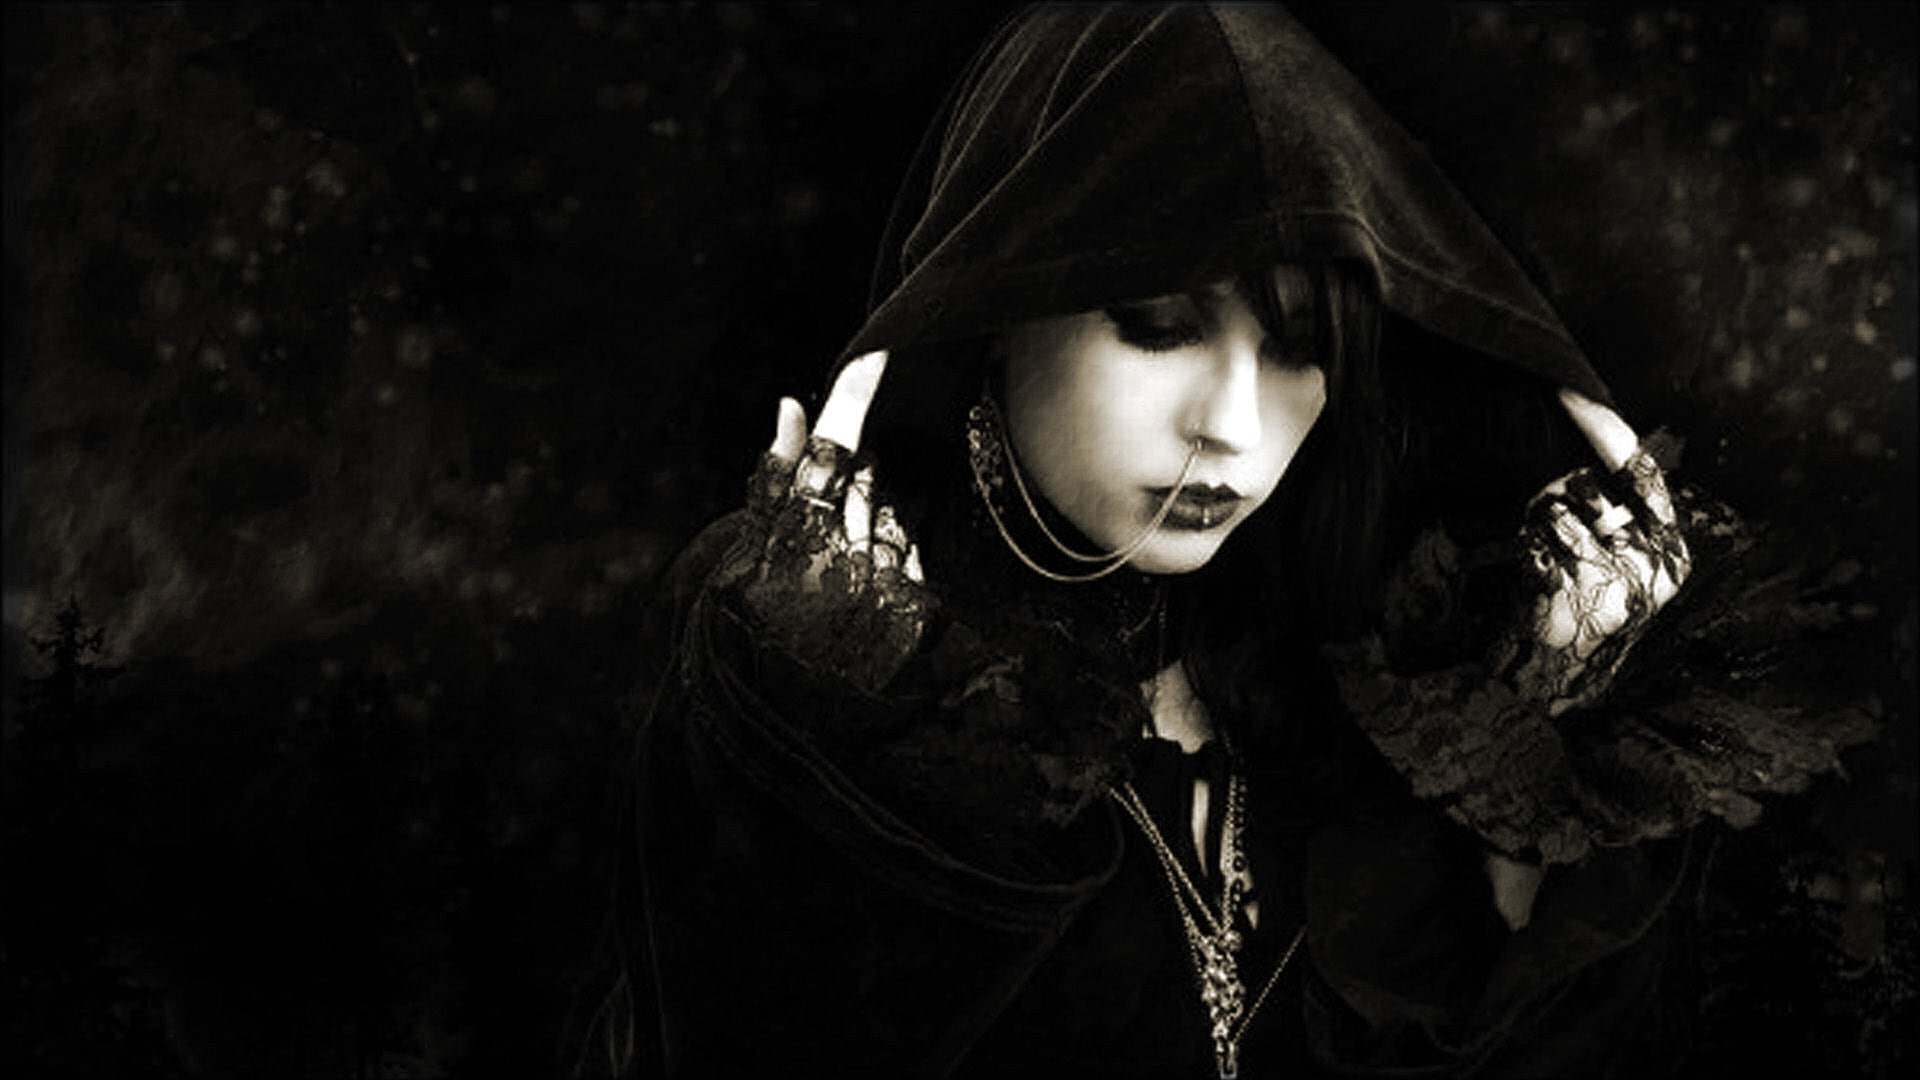 Dark, fantasy, girl, goth, Gothic, loli, style, witch, women